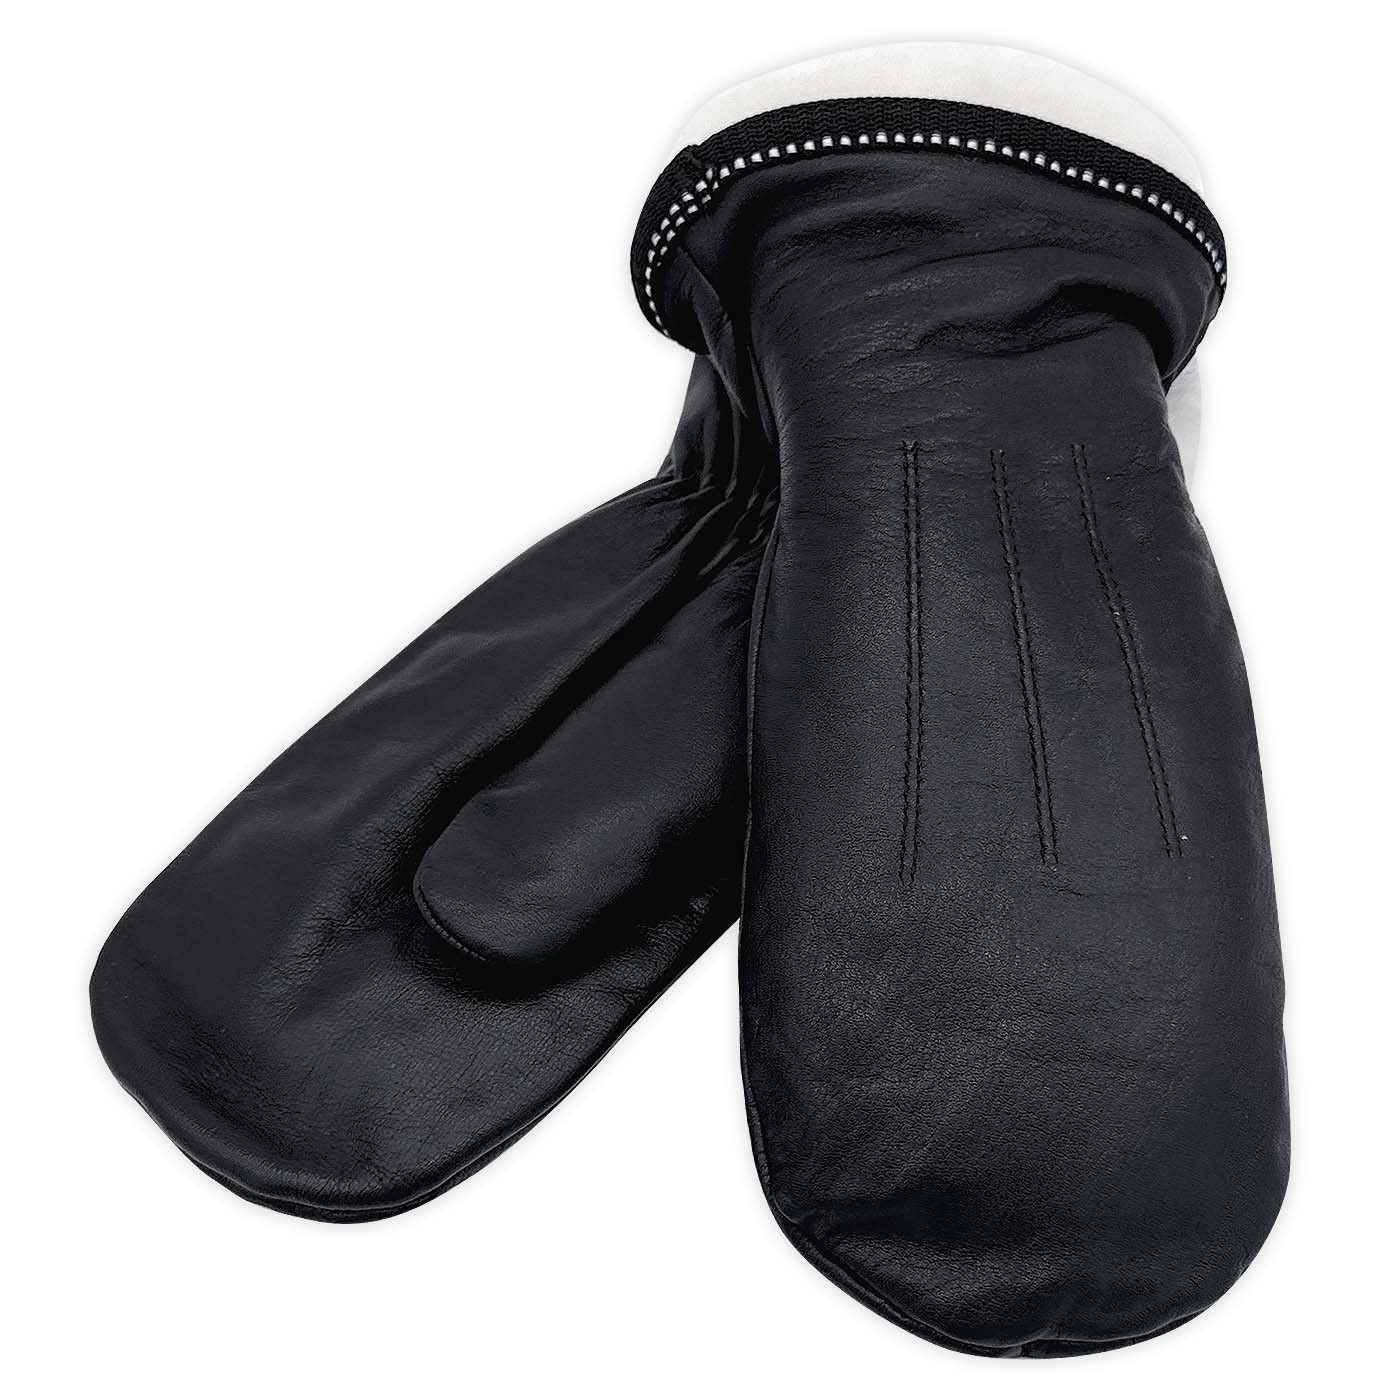 Warm & Comfortable Sheepskin Lined Leather Mittens for Men & Women Men's / Medium